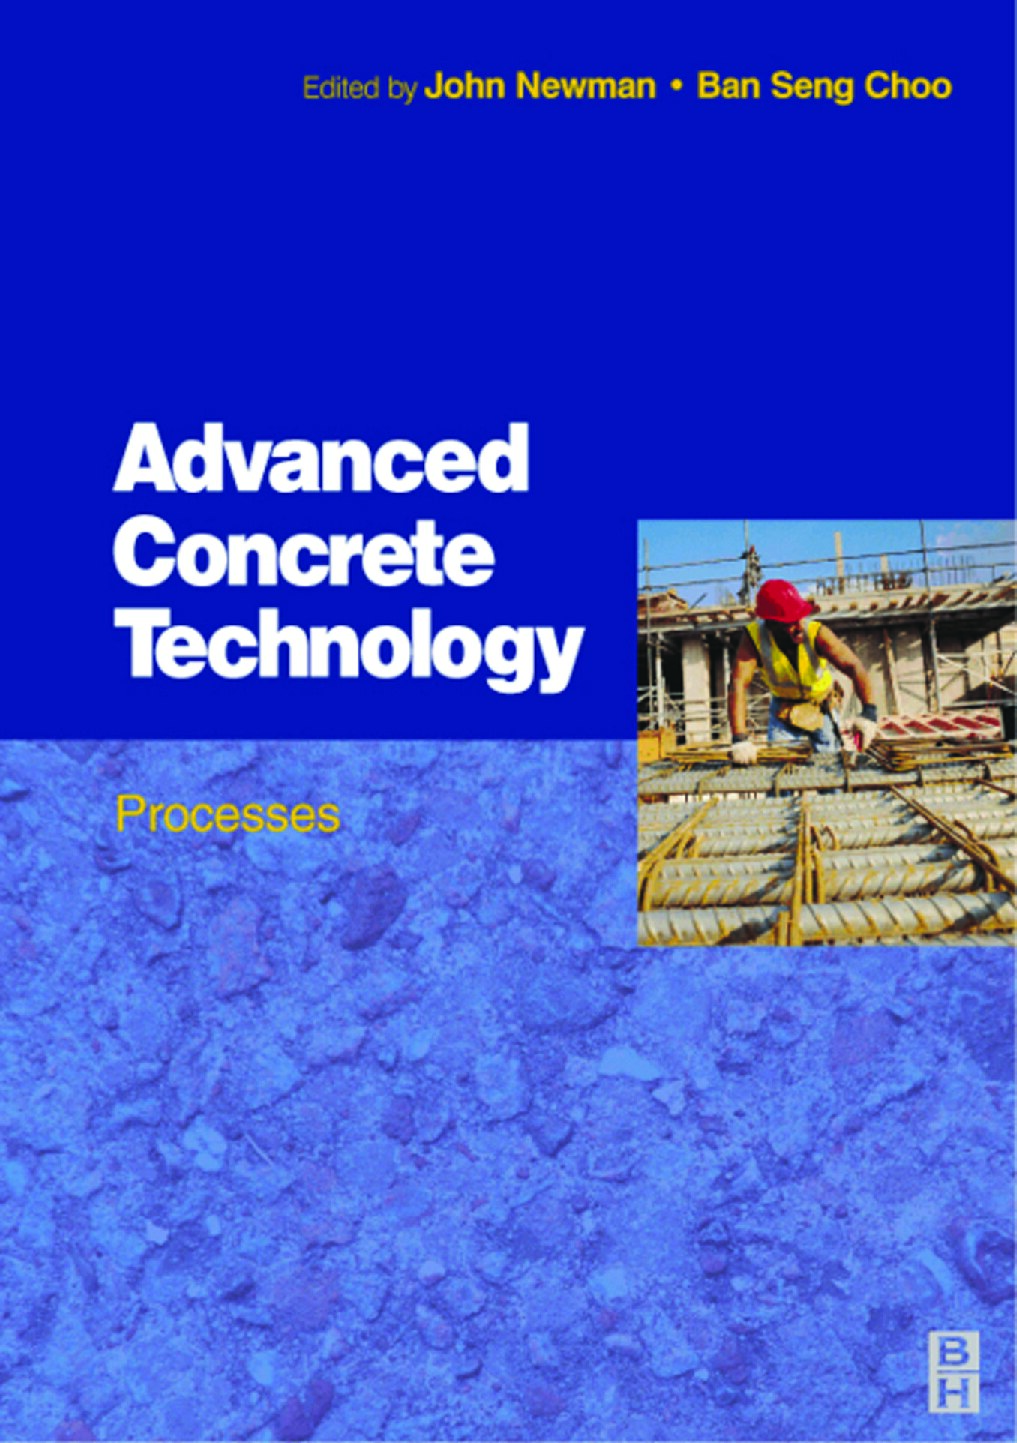 Advanced Concrete Technology 3 Processes (Advanced Concrete Technology Set) 2003